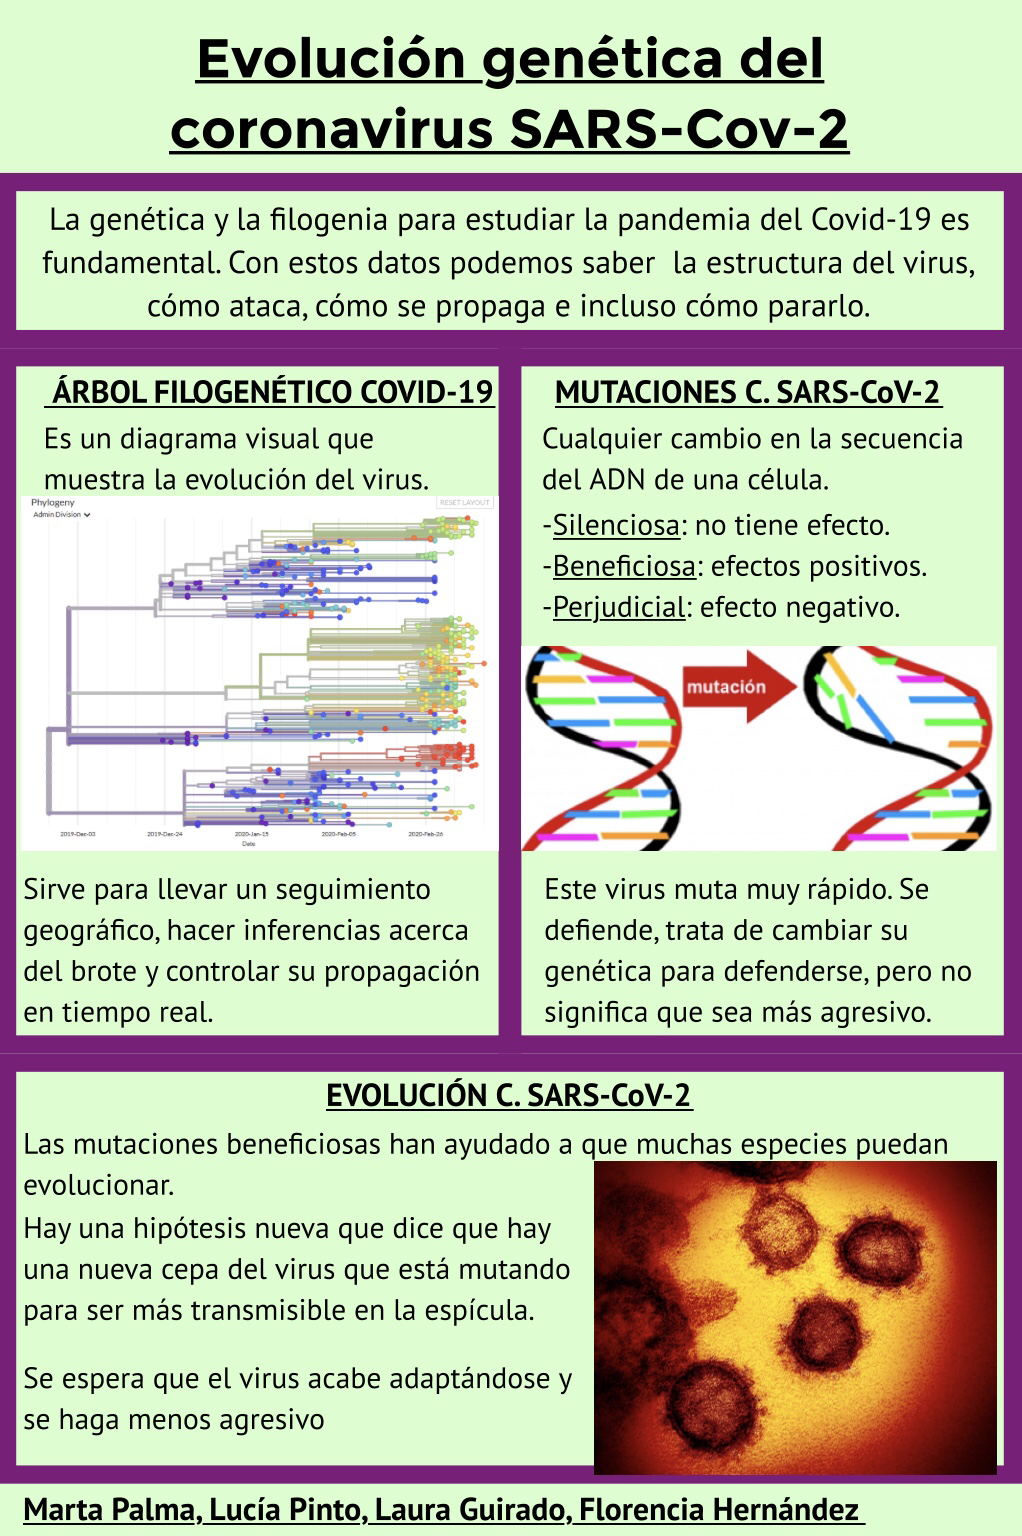 PÓSTER-CIENTÍFICO-SOBRE-LA-EVOLUCIÓN-GENÉTICA-DEL-CORONAVIRUS-SARS-CoV-2-12-may-2020-17_53